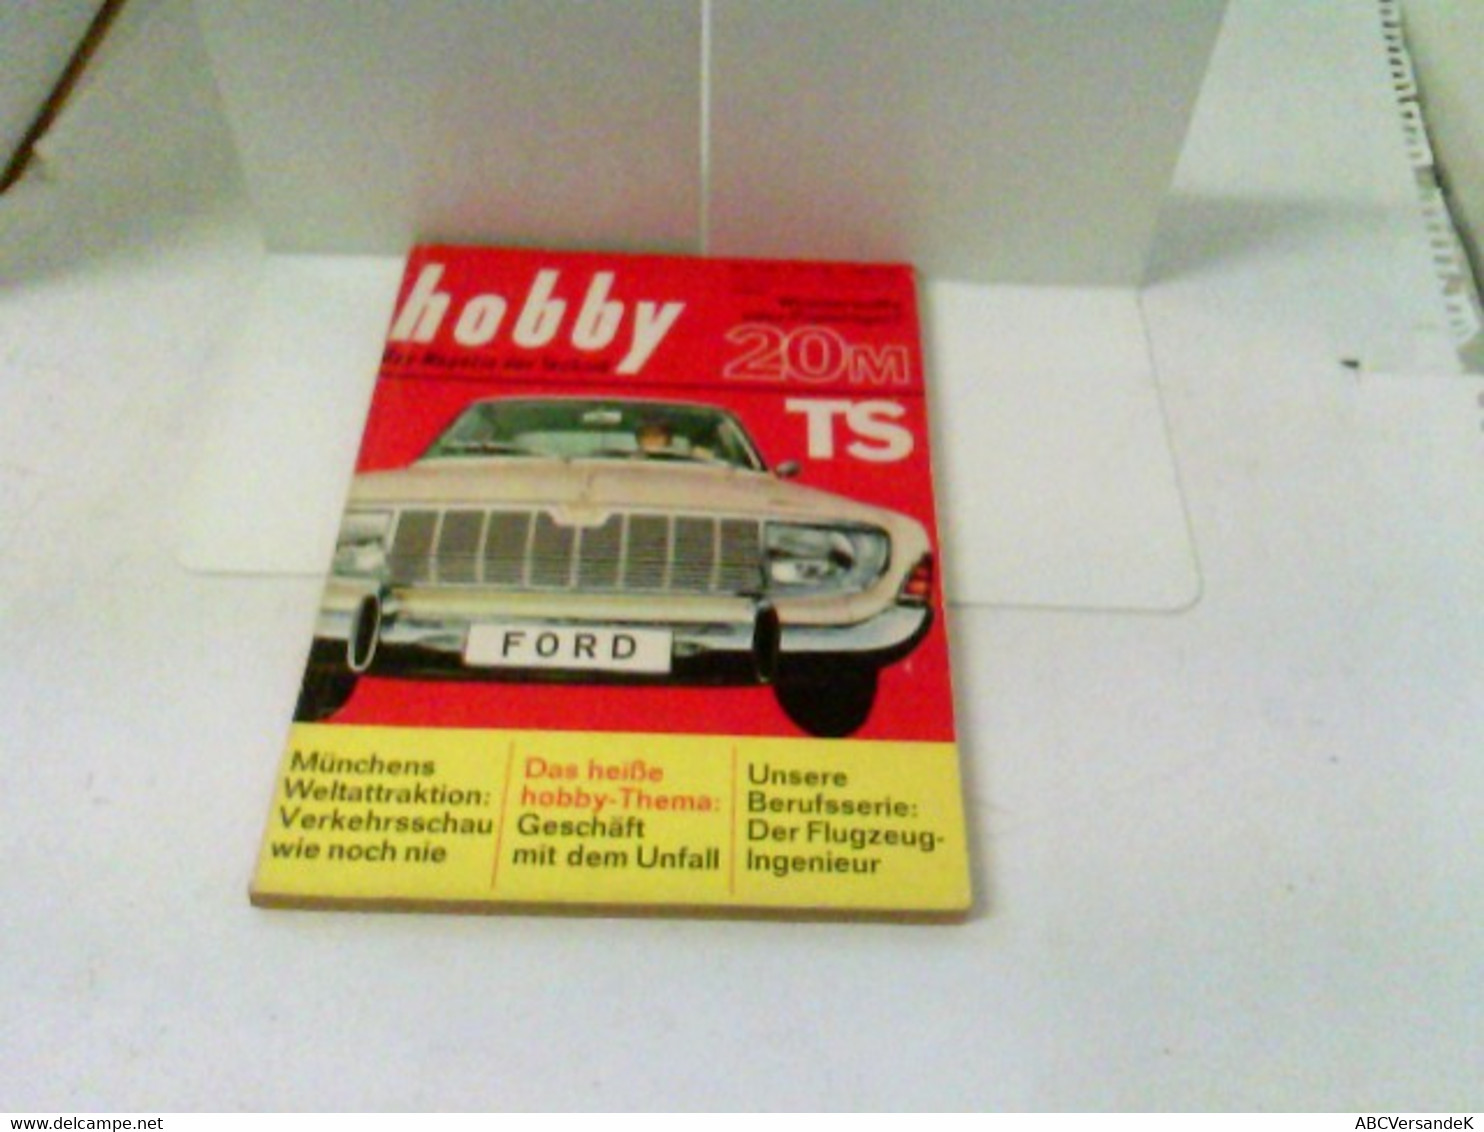 Hobby - Das Magazin Der Technik - Heft 1965/07 - Wunderwaffe Oder Papiertiger Ford 20m TS - Technical